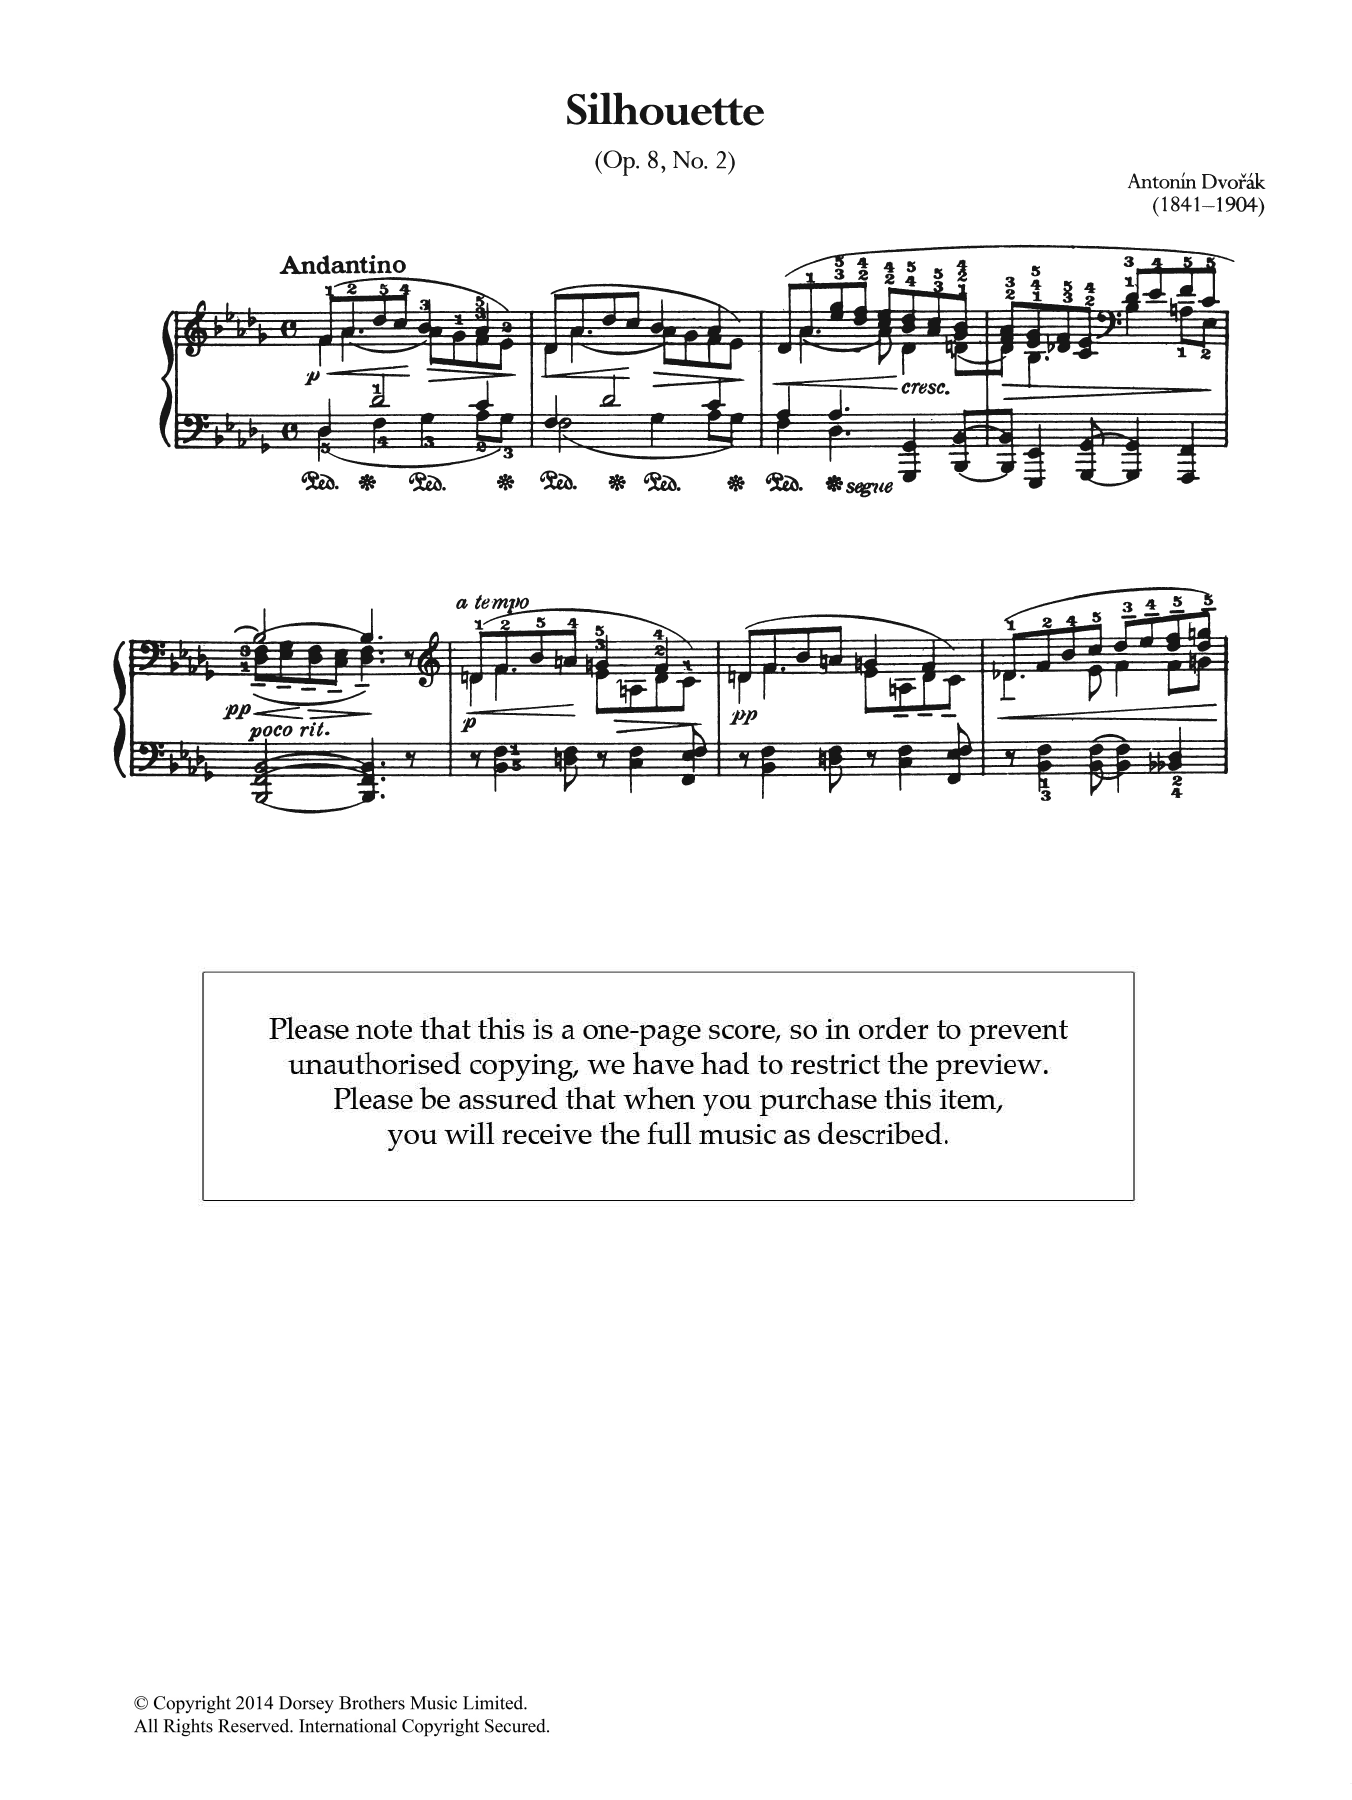 Antonín Dvorák Silhouette, Op.8 No.2 Sheet Music Notes & Chords for Piano - Download or Print PDF